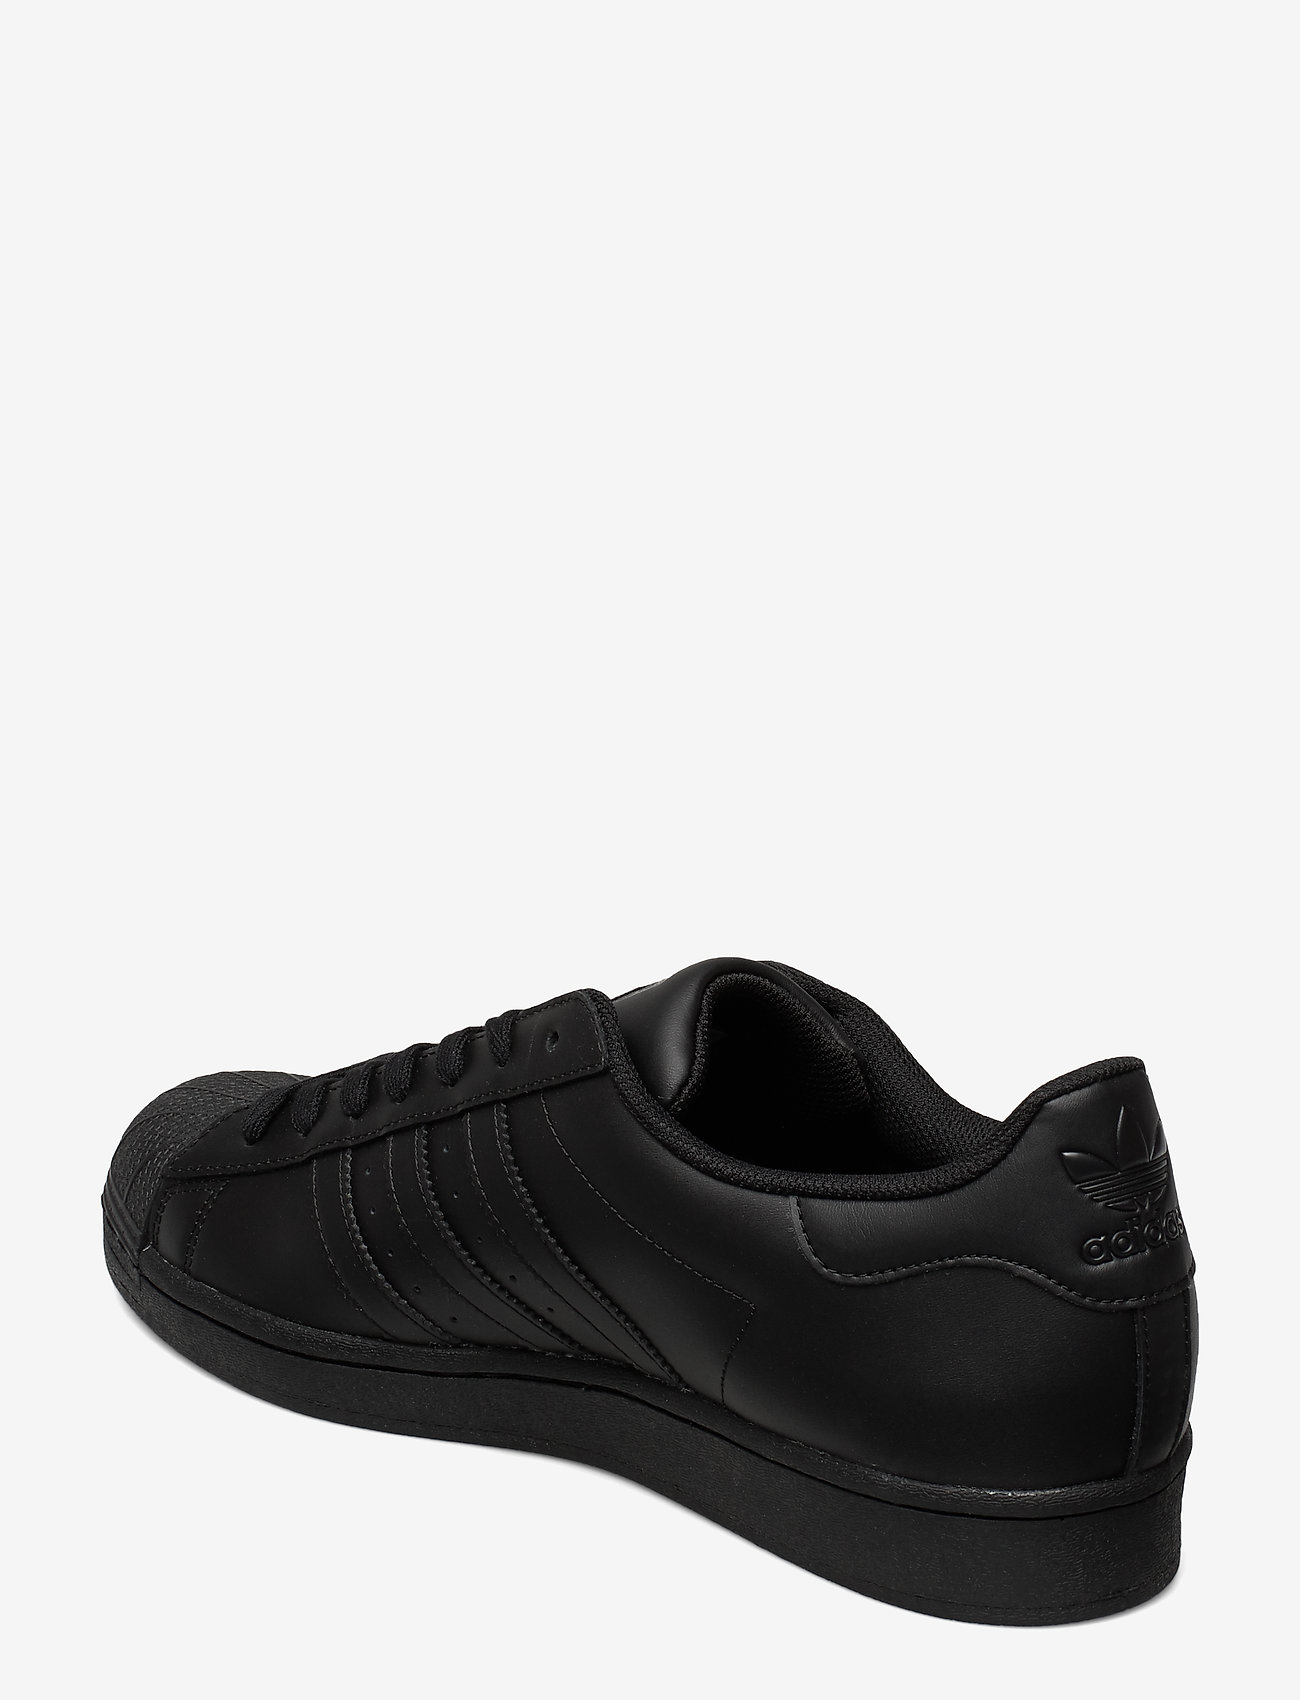 adidas Originals - SUPERSTAR - laag sneakers - cblack/cblack/cblack - 1